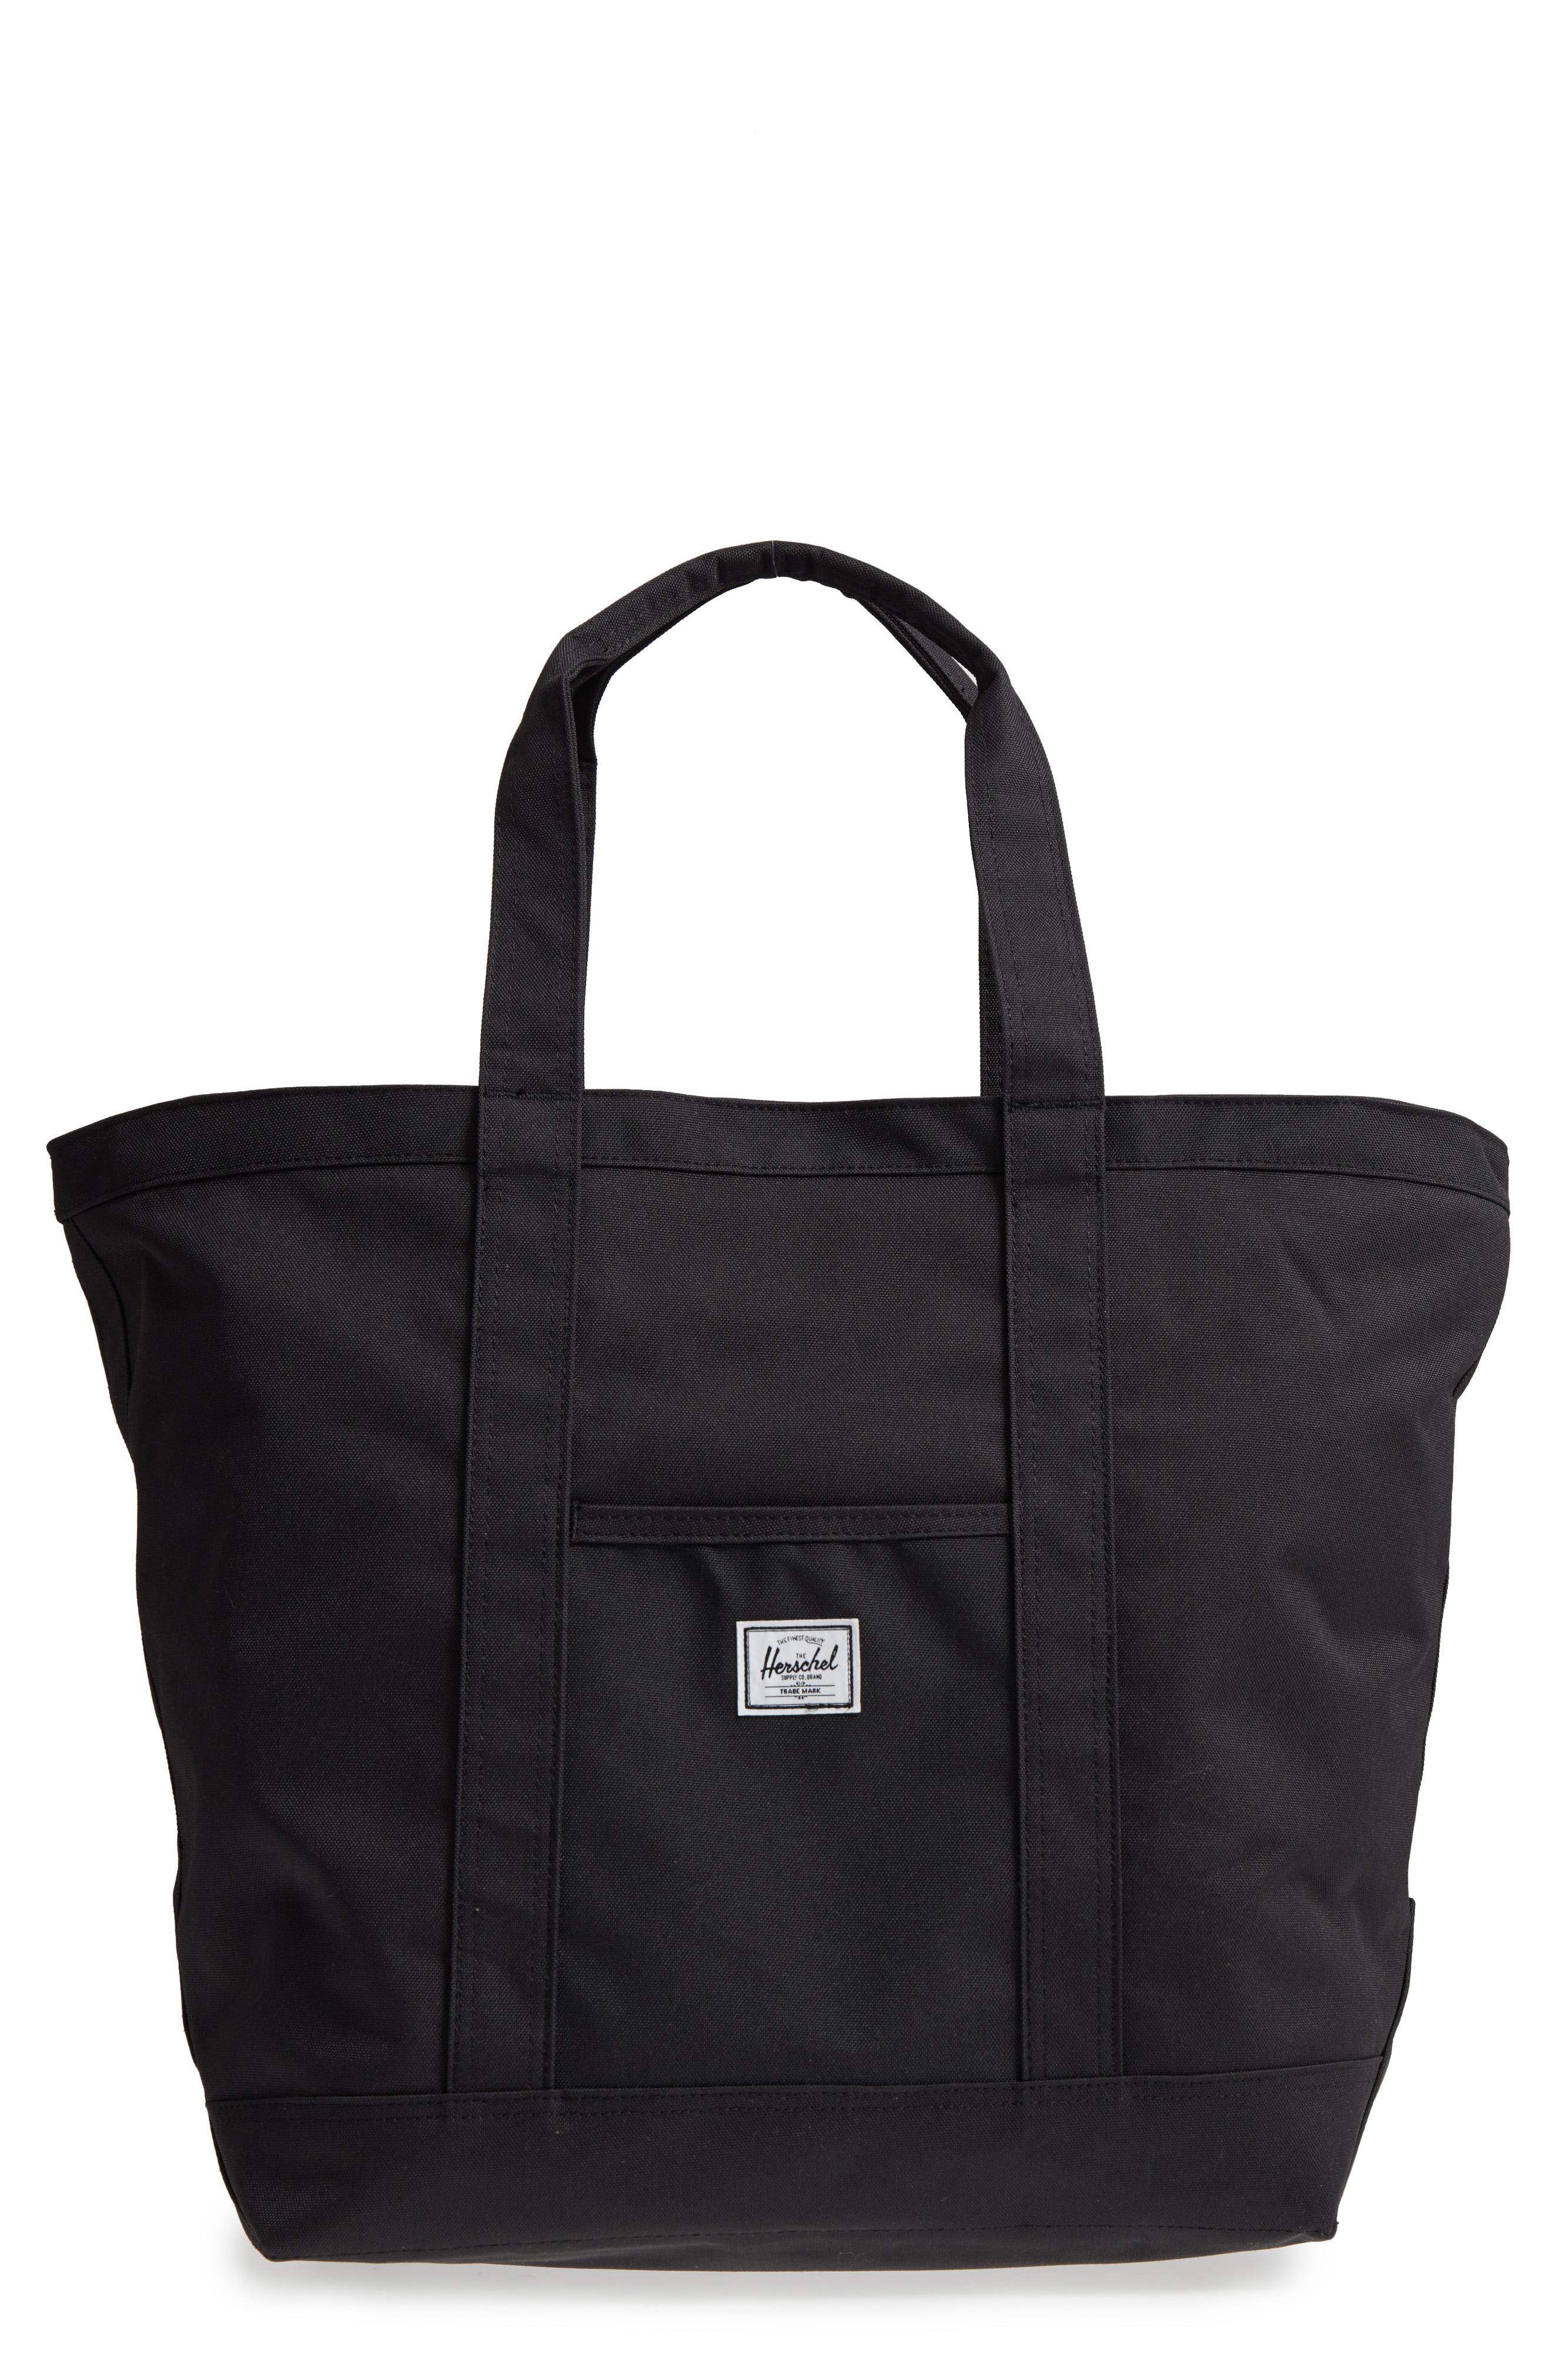 Herschel Supply Co. Bamfield Mid-volume Tote Bag in Black - Lyst